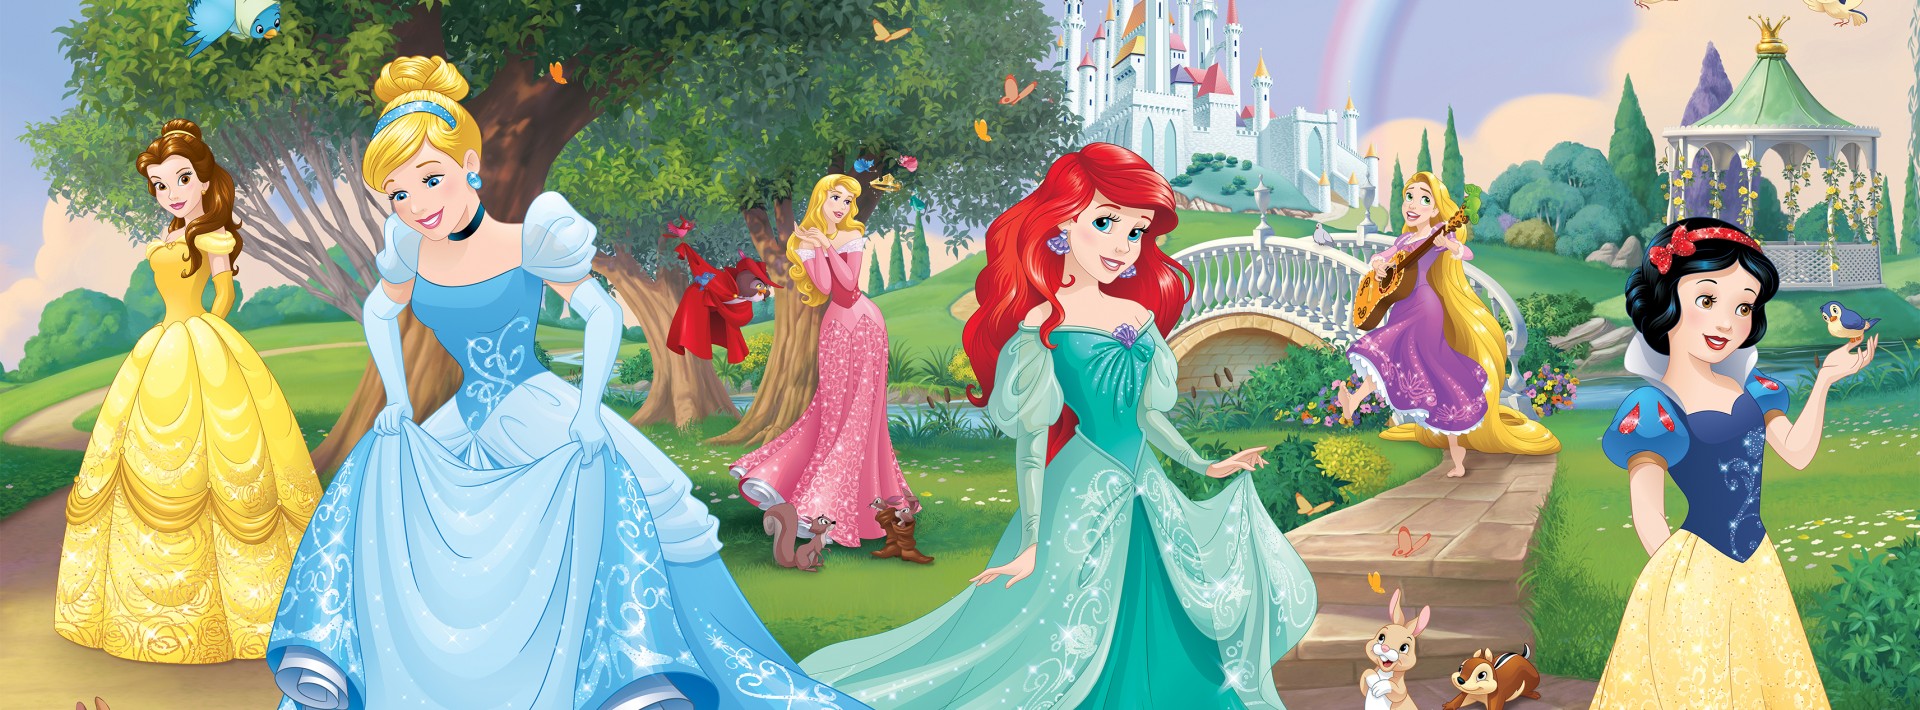 Disney Princess Wall Ural - HD Wallpaper 